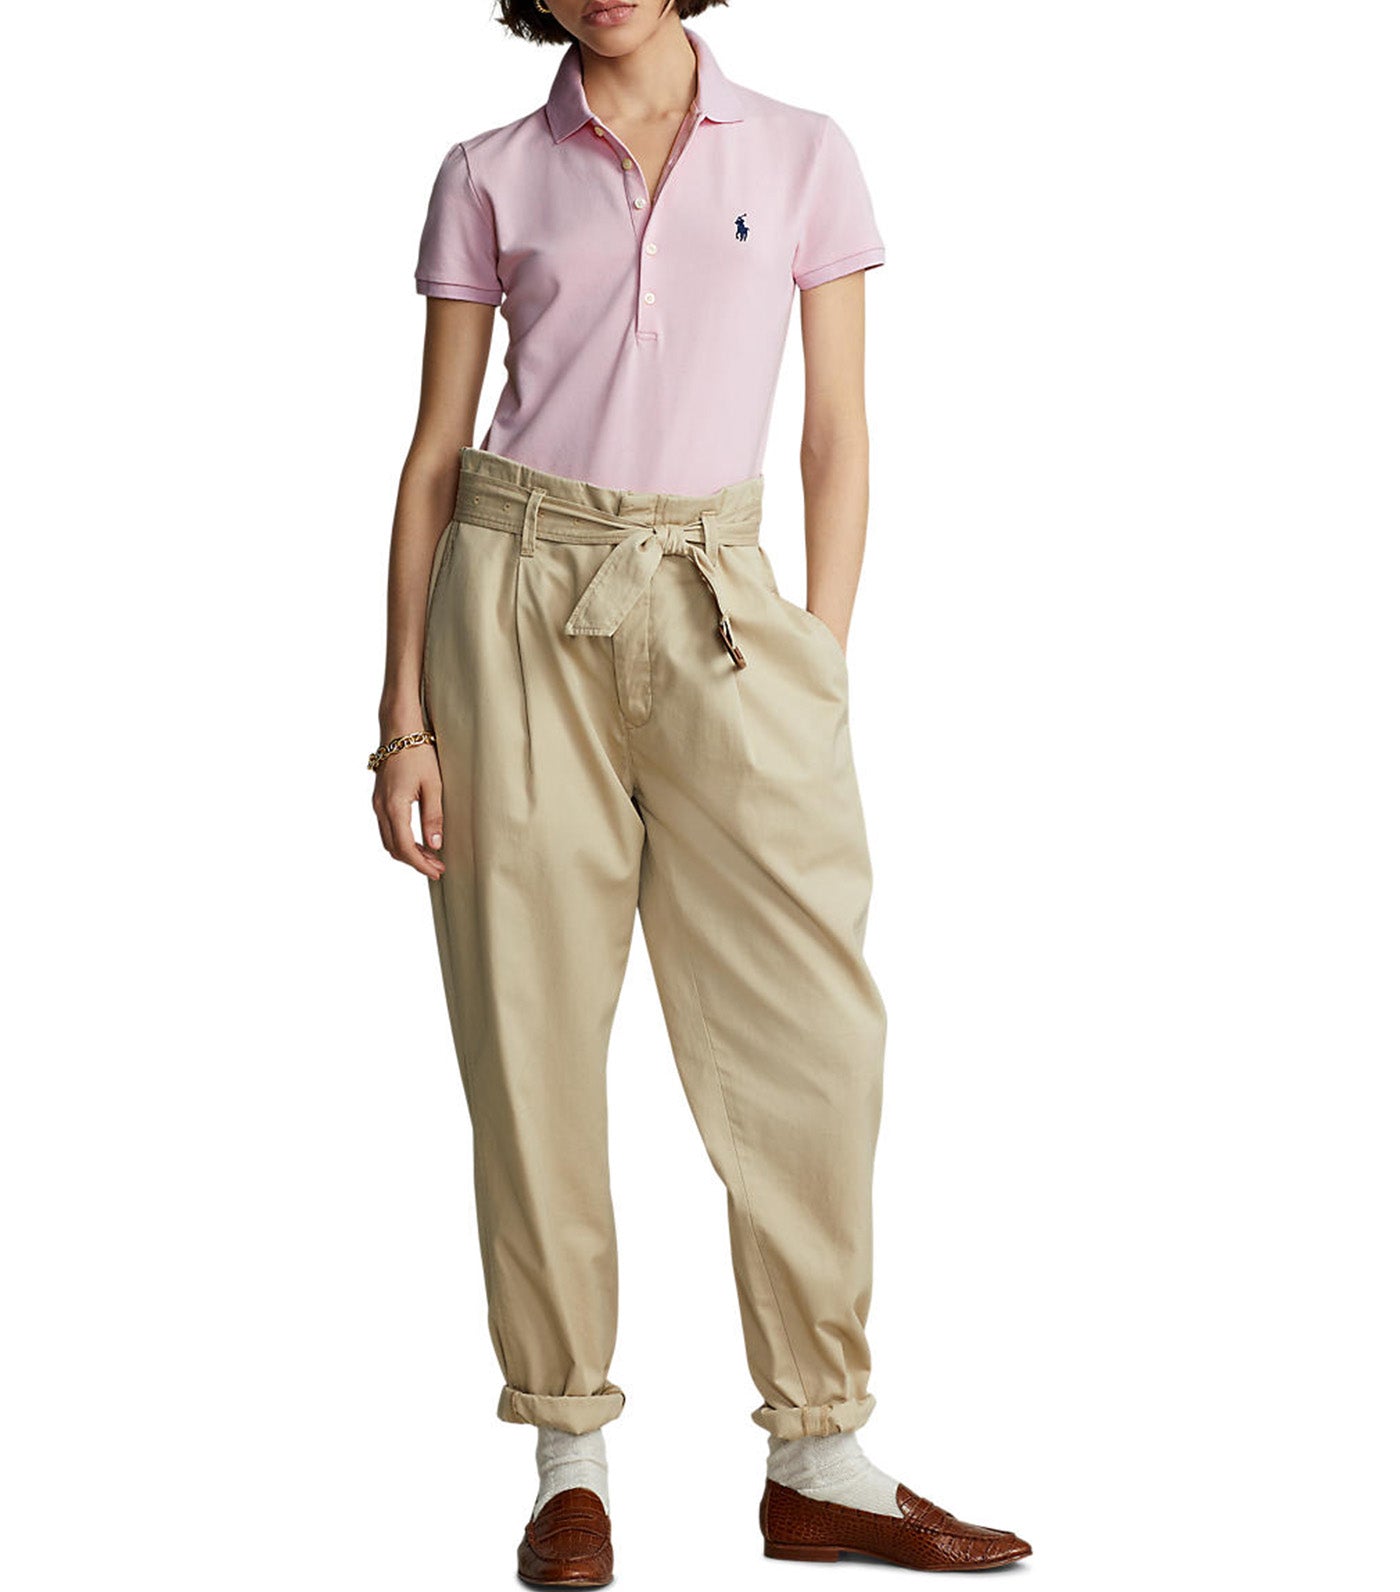 Polo Ralph Lauren Women's Slim Fit Stretch Julie Polo Shirt Pink